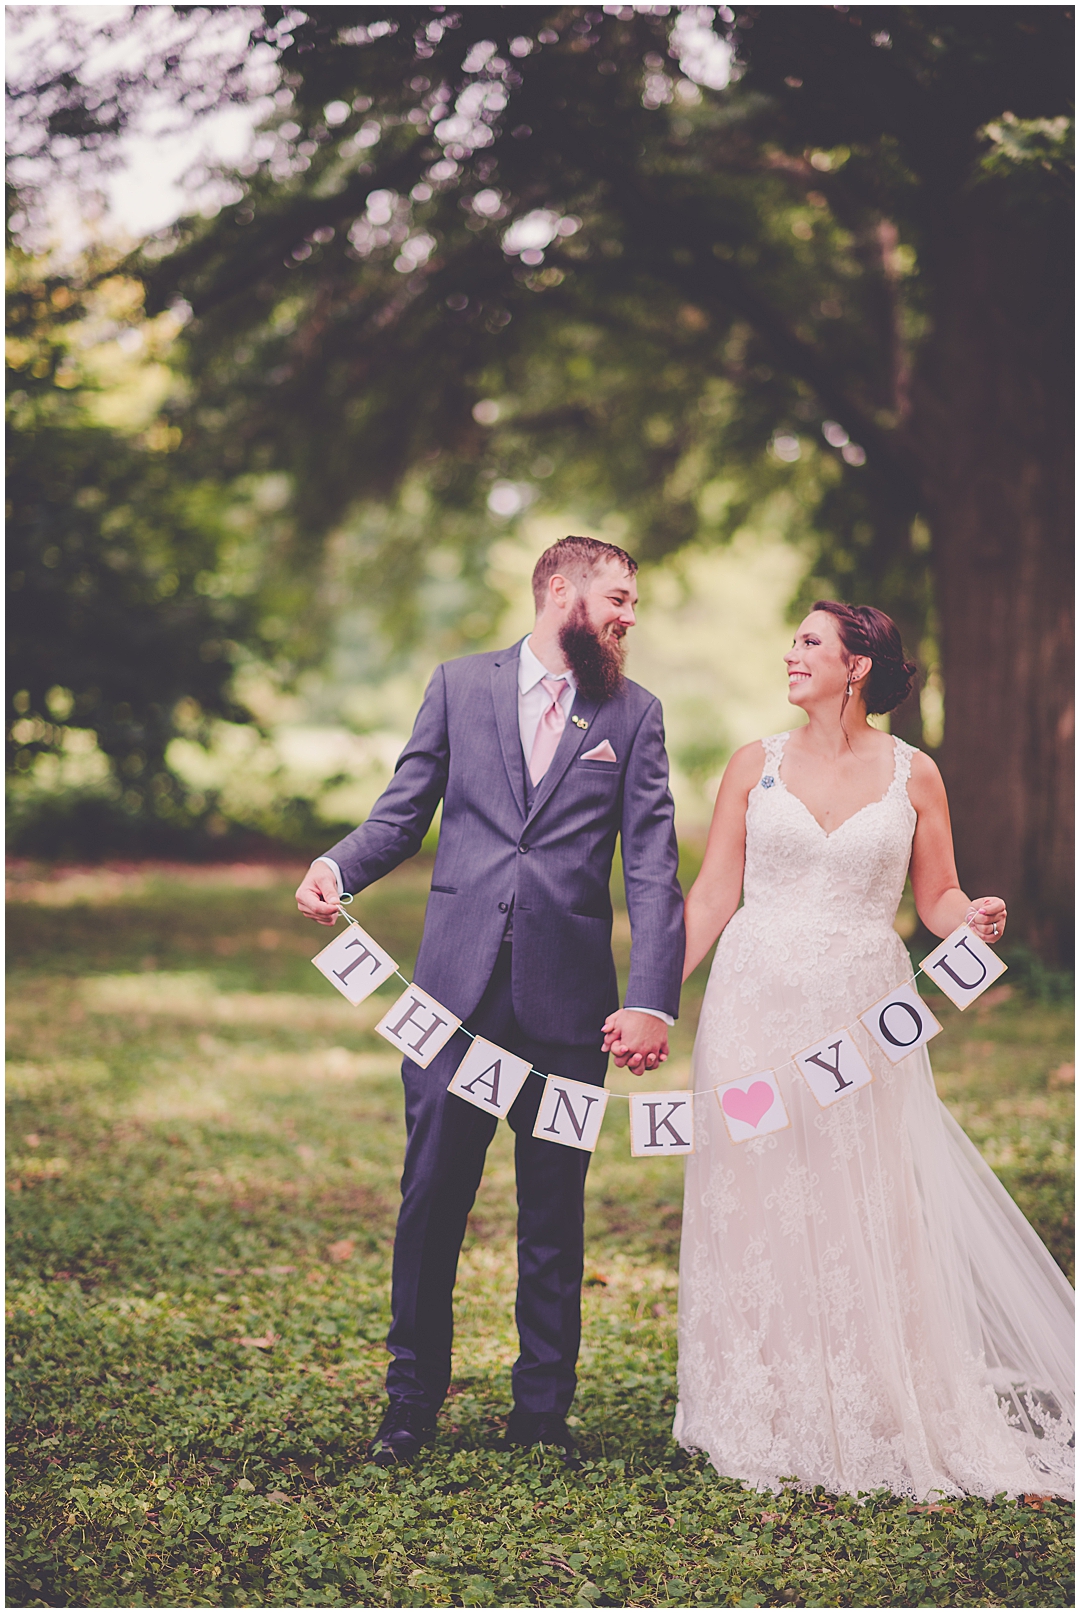 Kara Evans Photographer - Wedding Wednesday - Wedding Blogger - Sending Wedding Day Thank You's - Wedding Thank You Advice